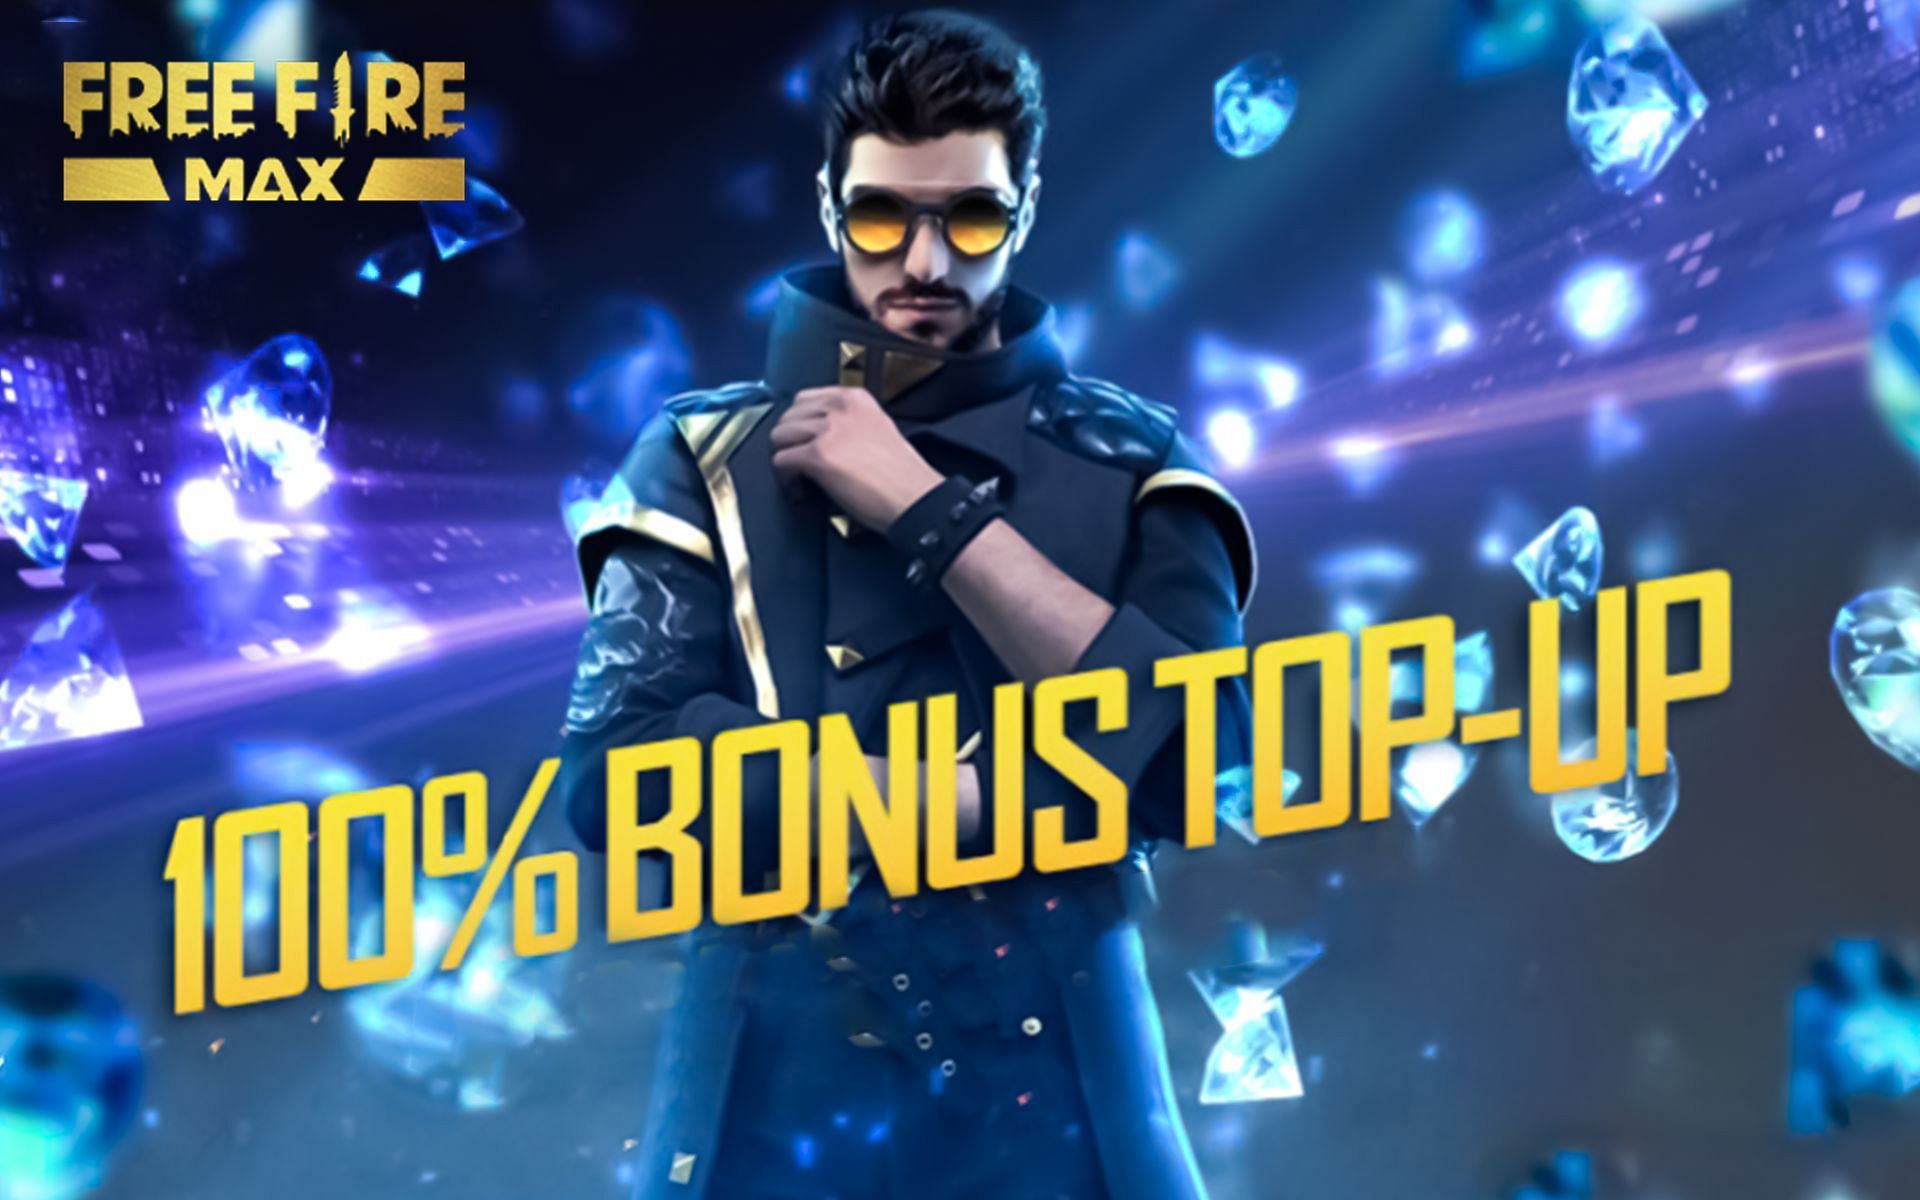 Free Fire MAX is offering 100% Top Up Bonus to players (Image via Sportskeeda)